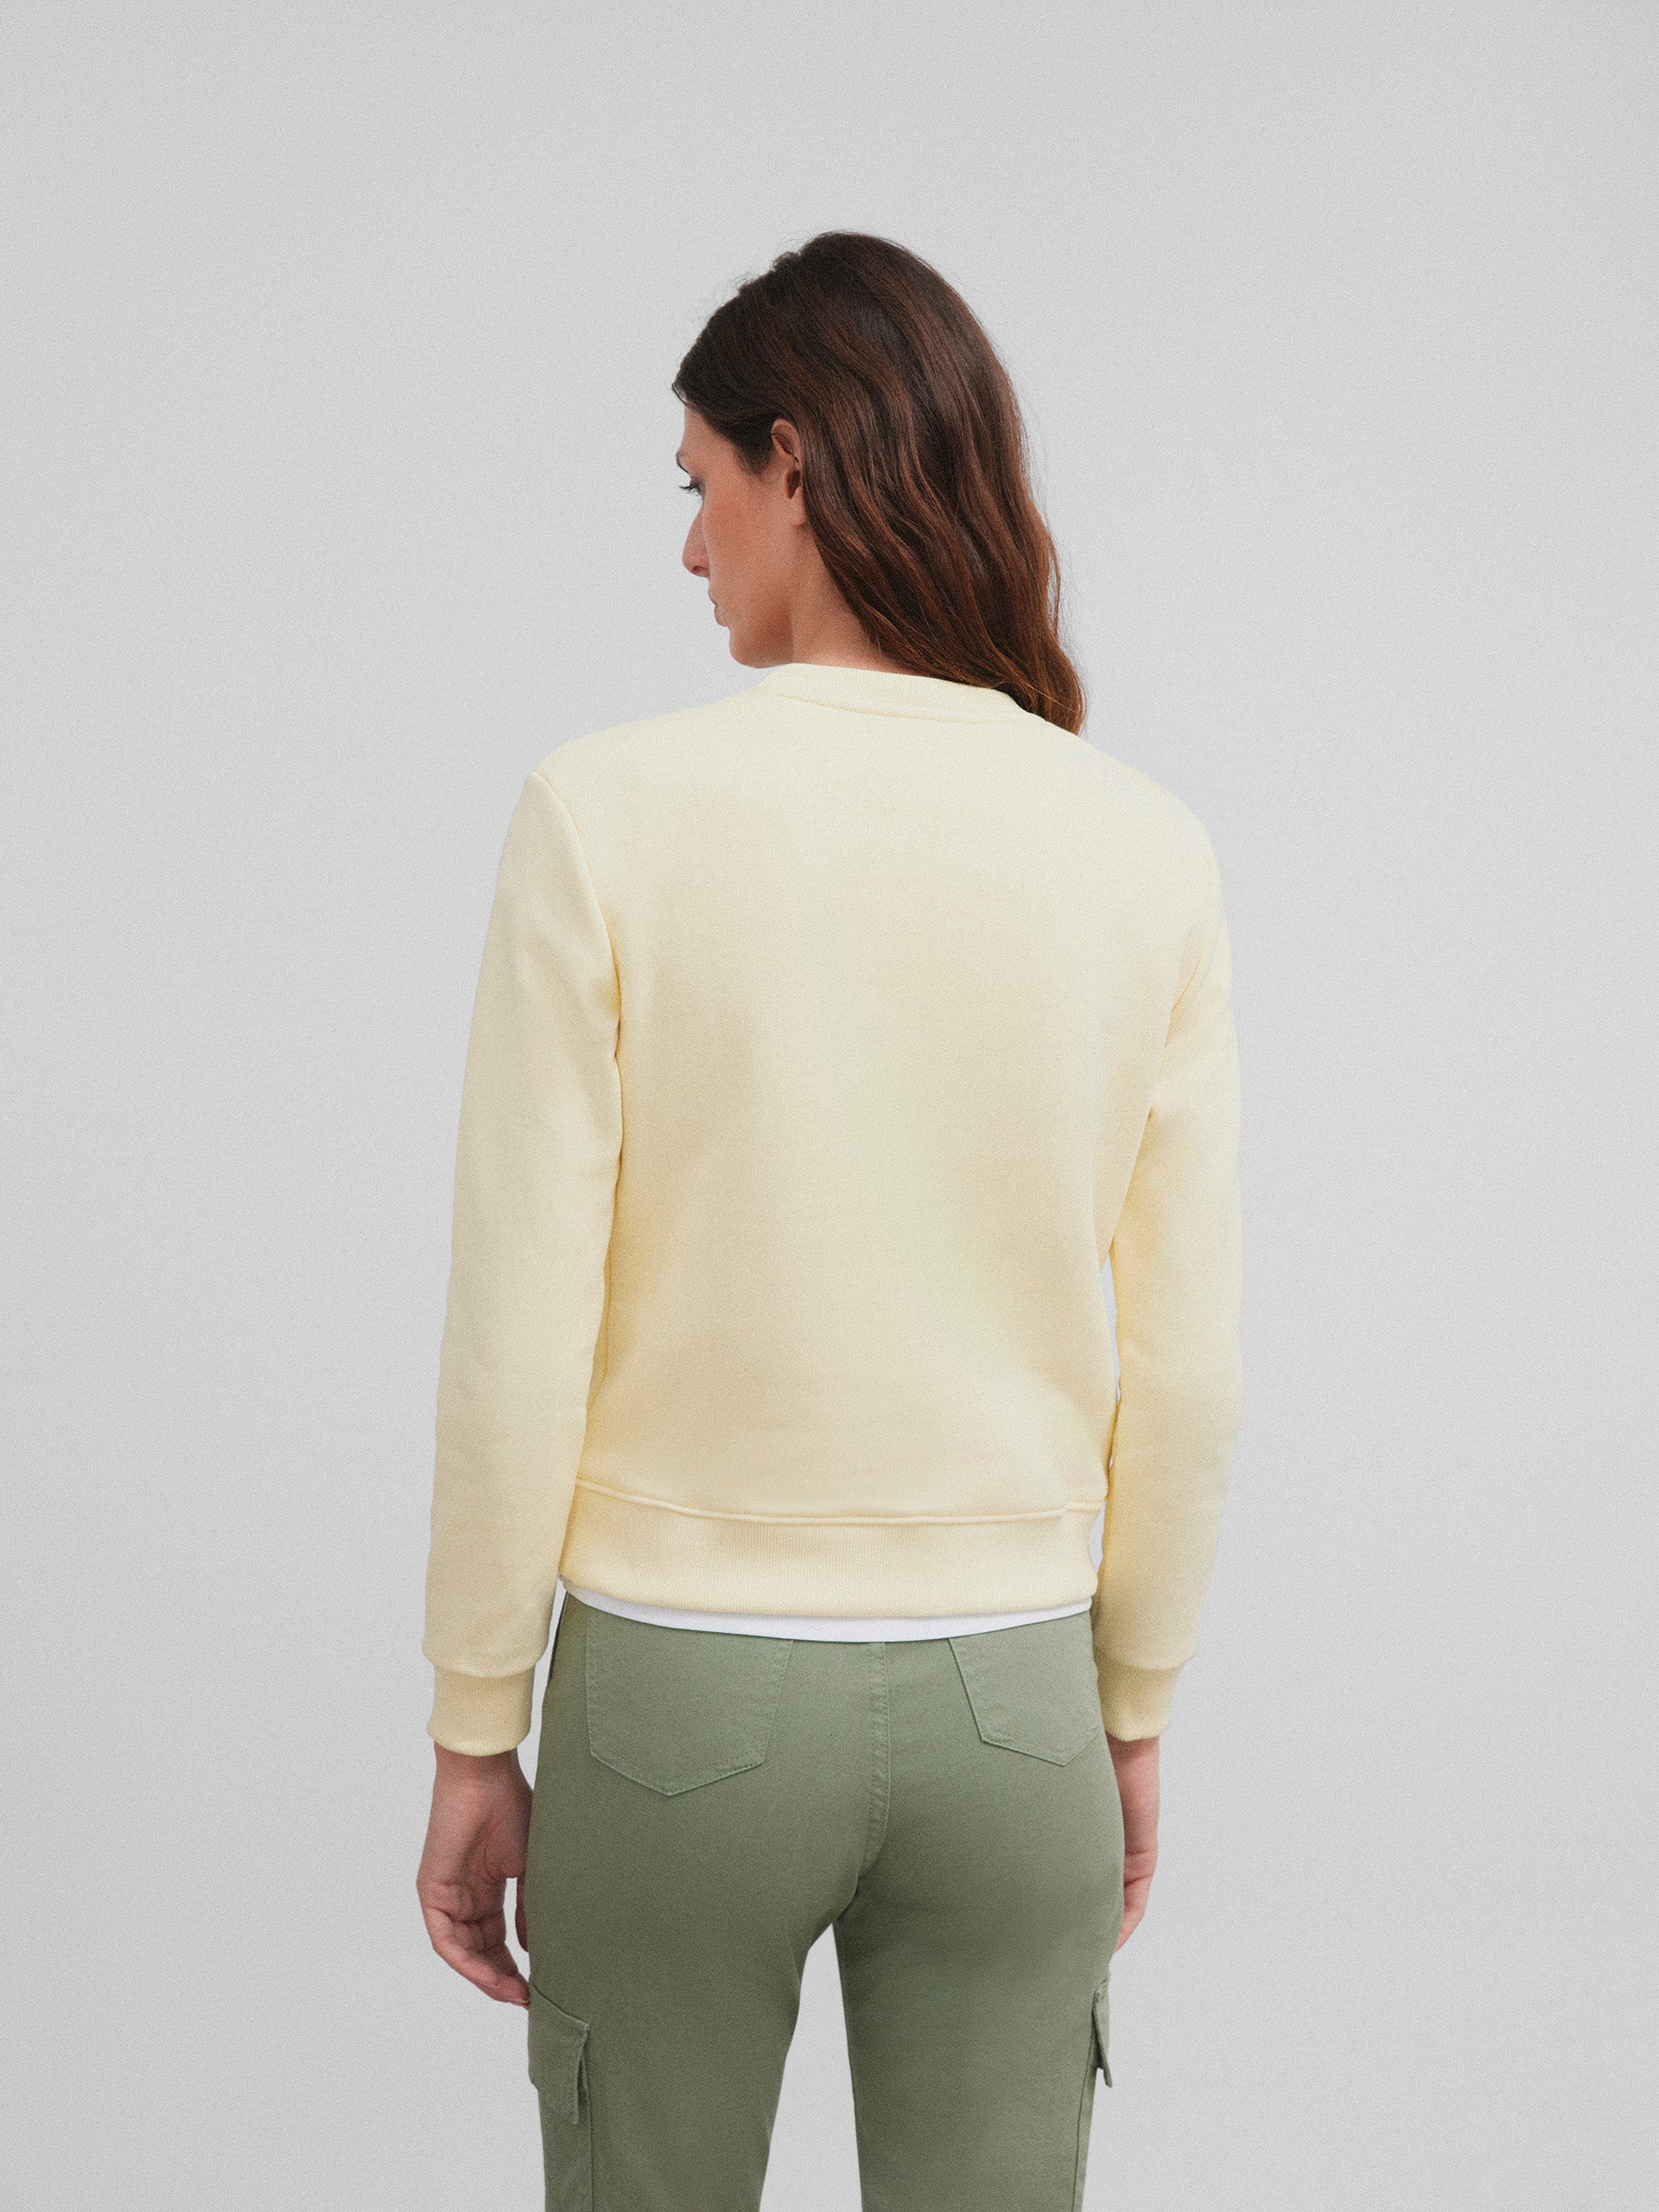 Silbon classic yellow woman sweatshirt